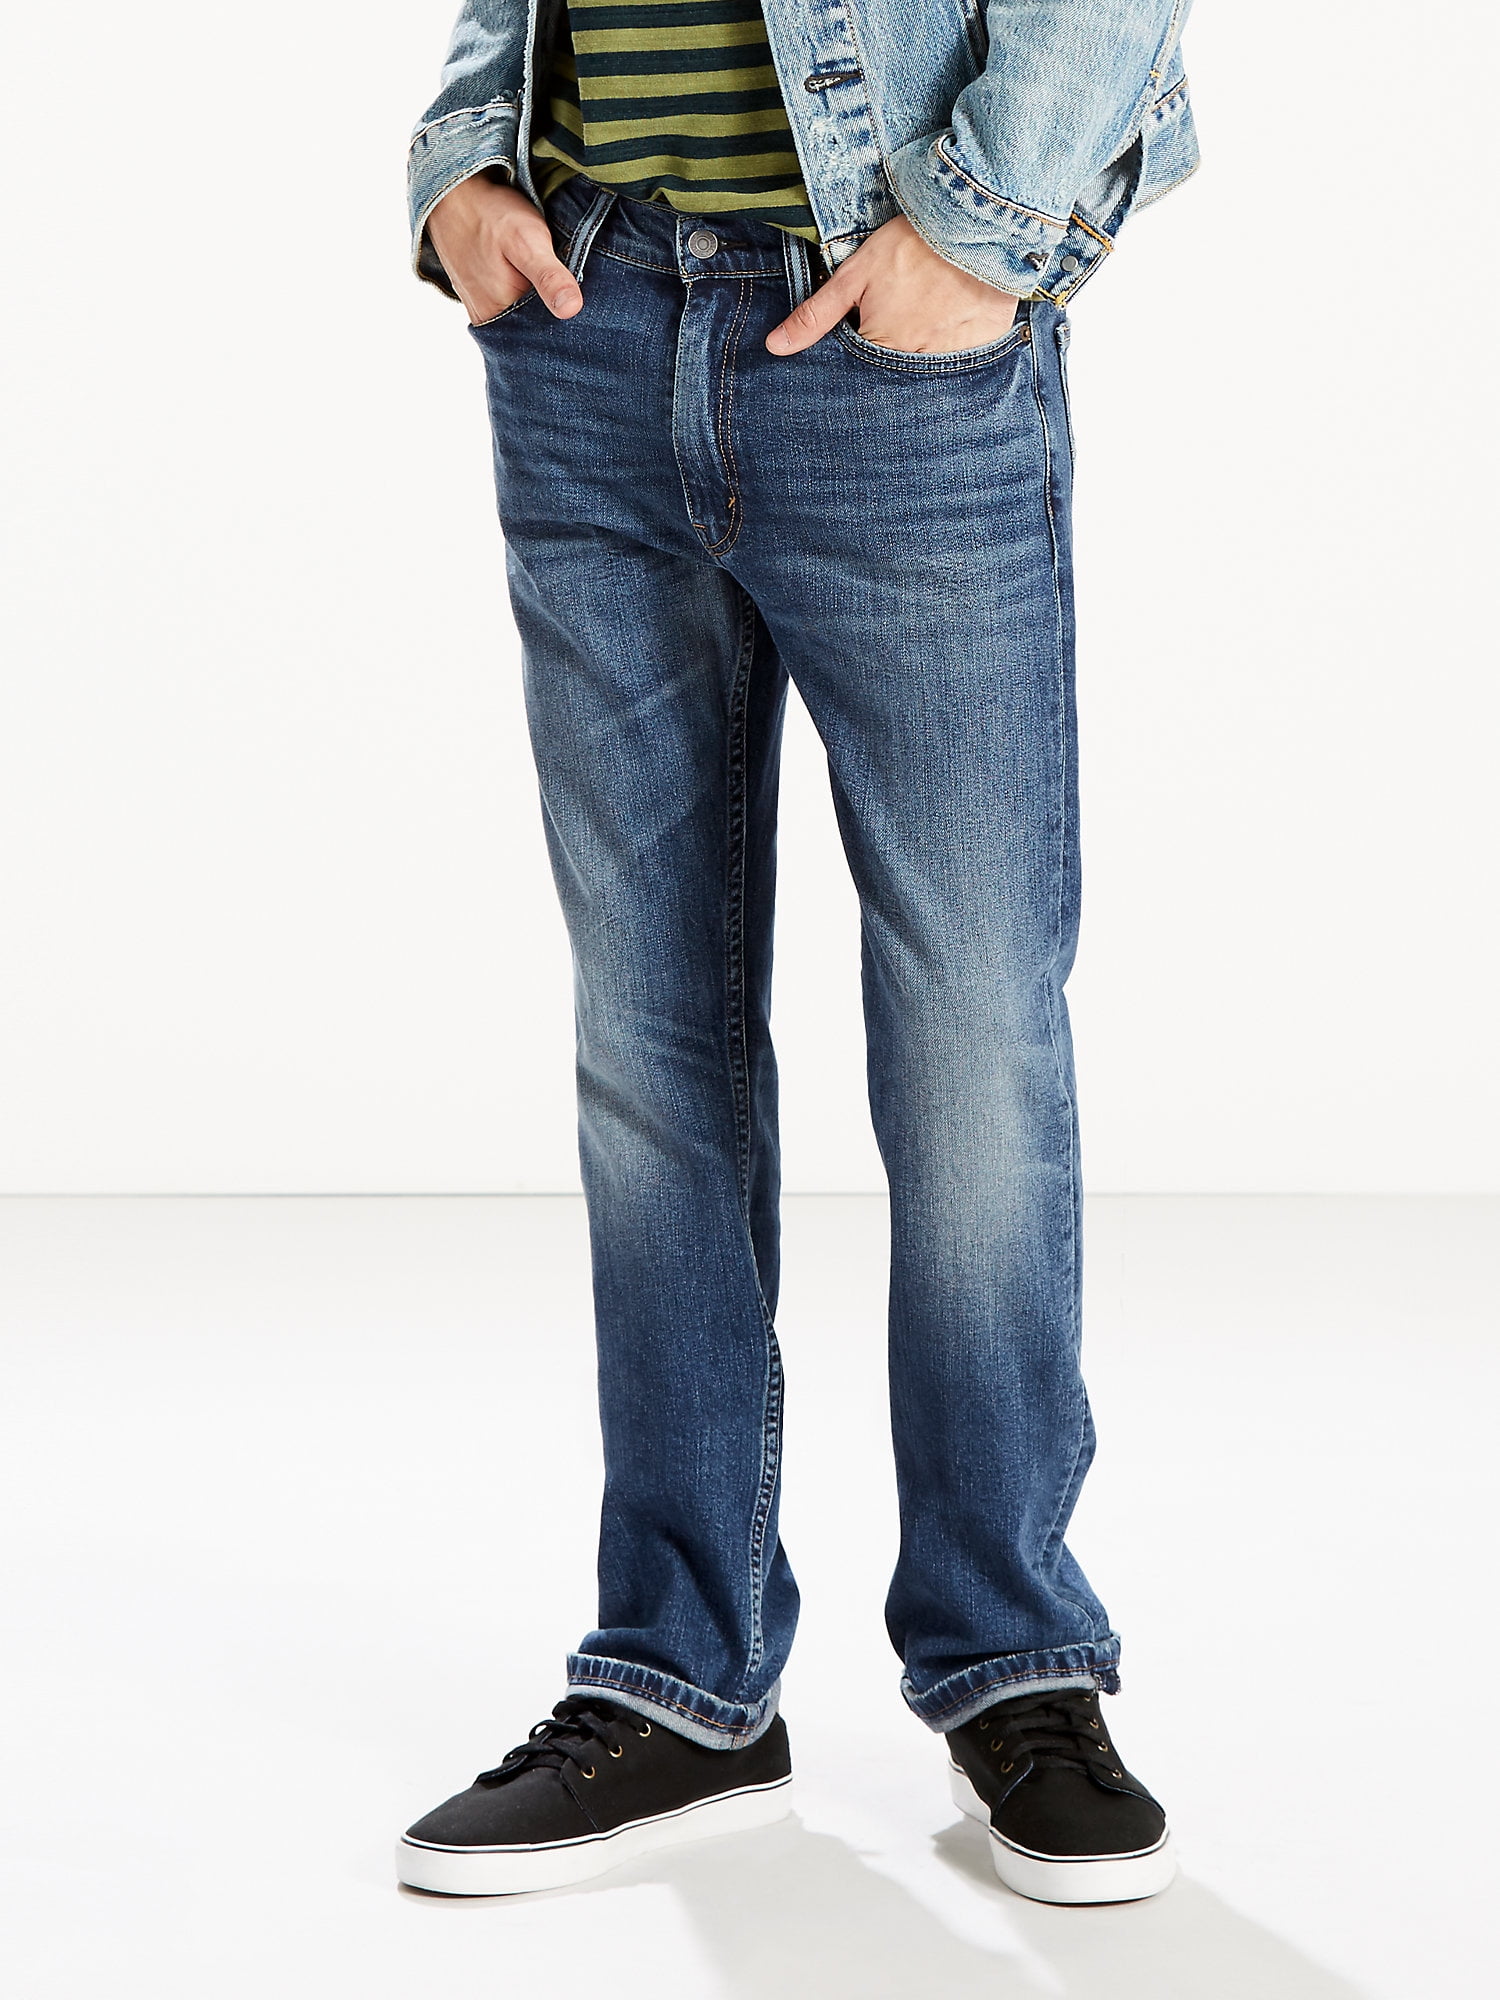 Levi's - Levi's Men's 513 Slim Straight Fit Jeans - Walmart.com ...